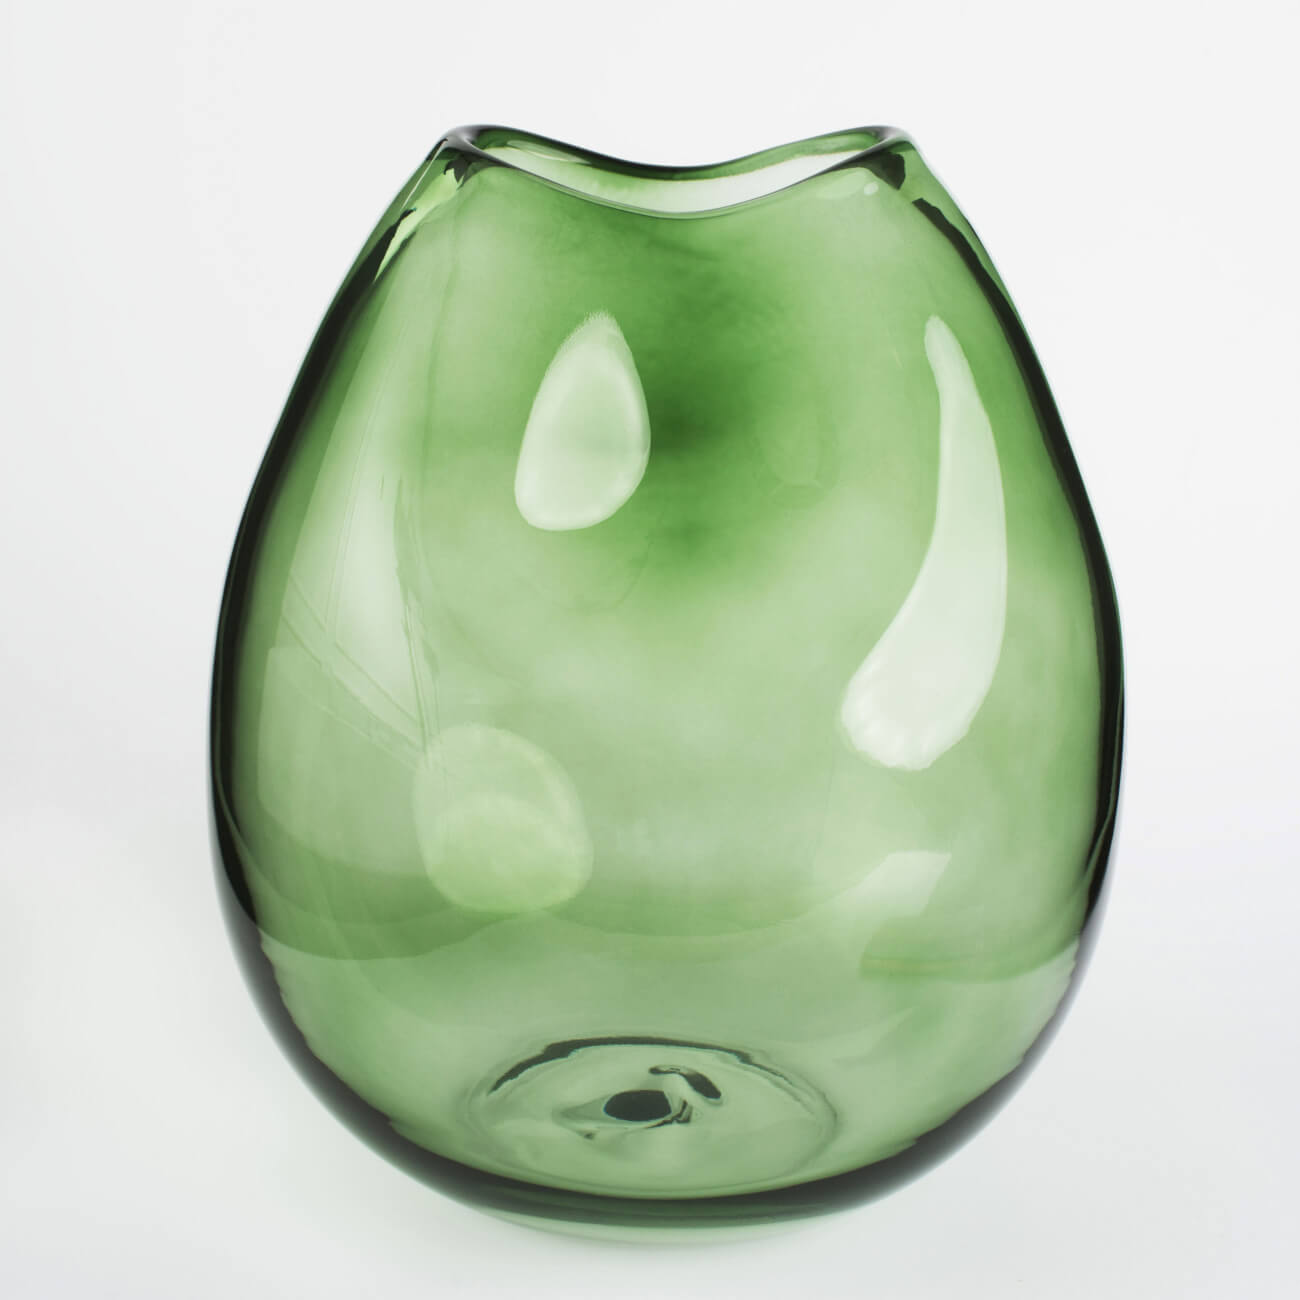 ваза margaret стекло прозрачно зеленая 19 см Ваза для цветов, 25 см, стекло, зеленая, Clear color